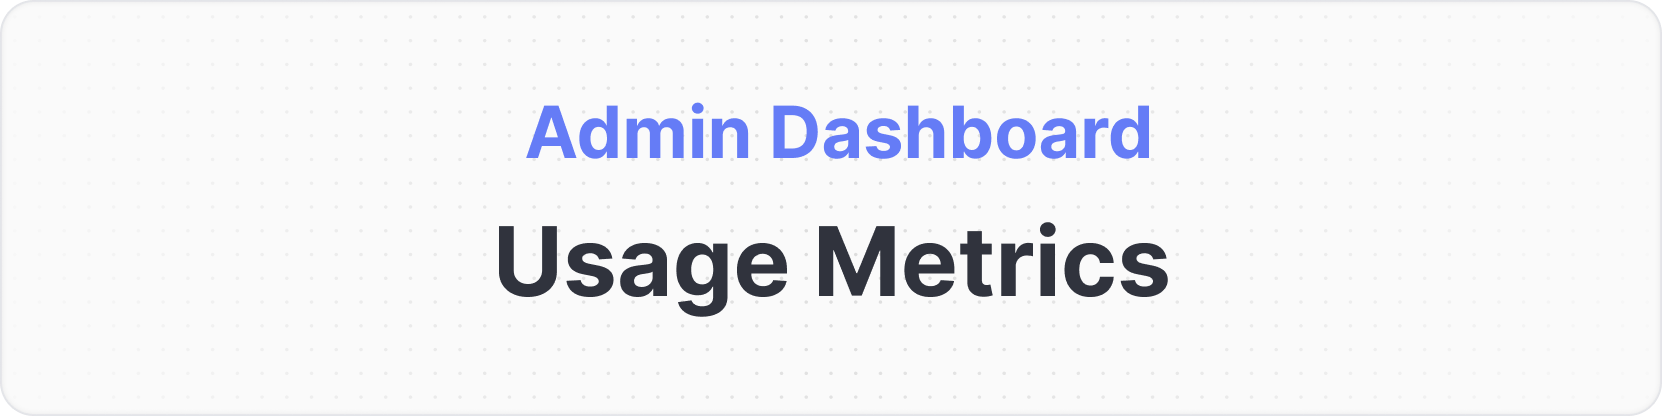 Admin Dashboard Usage page